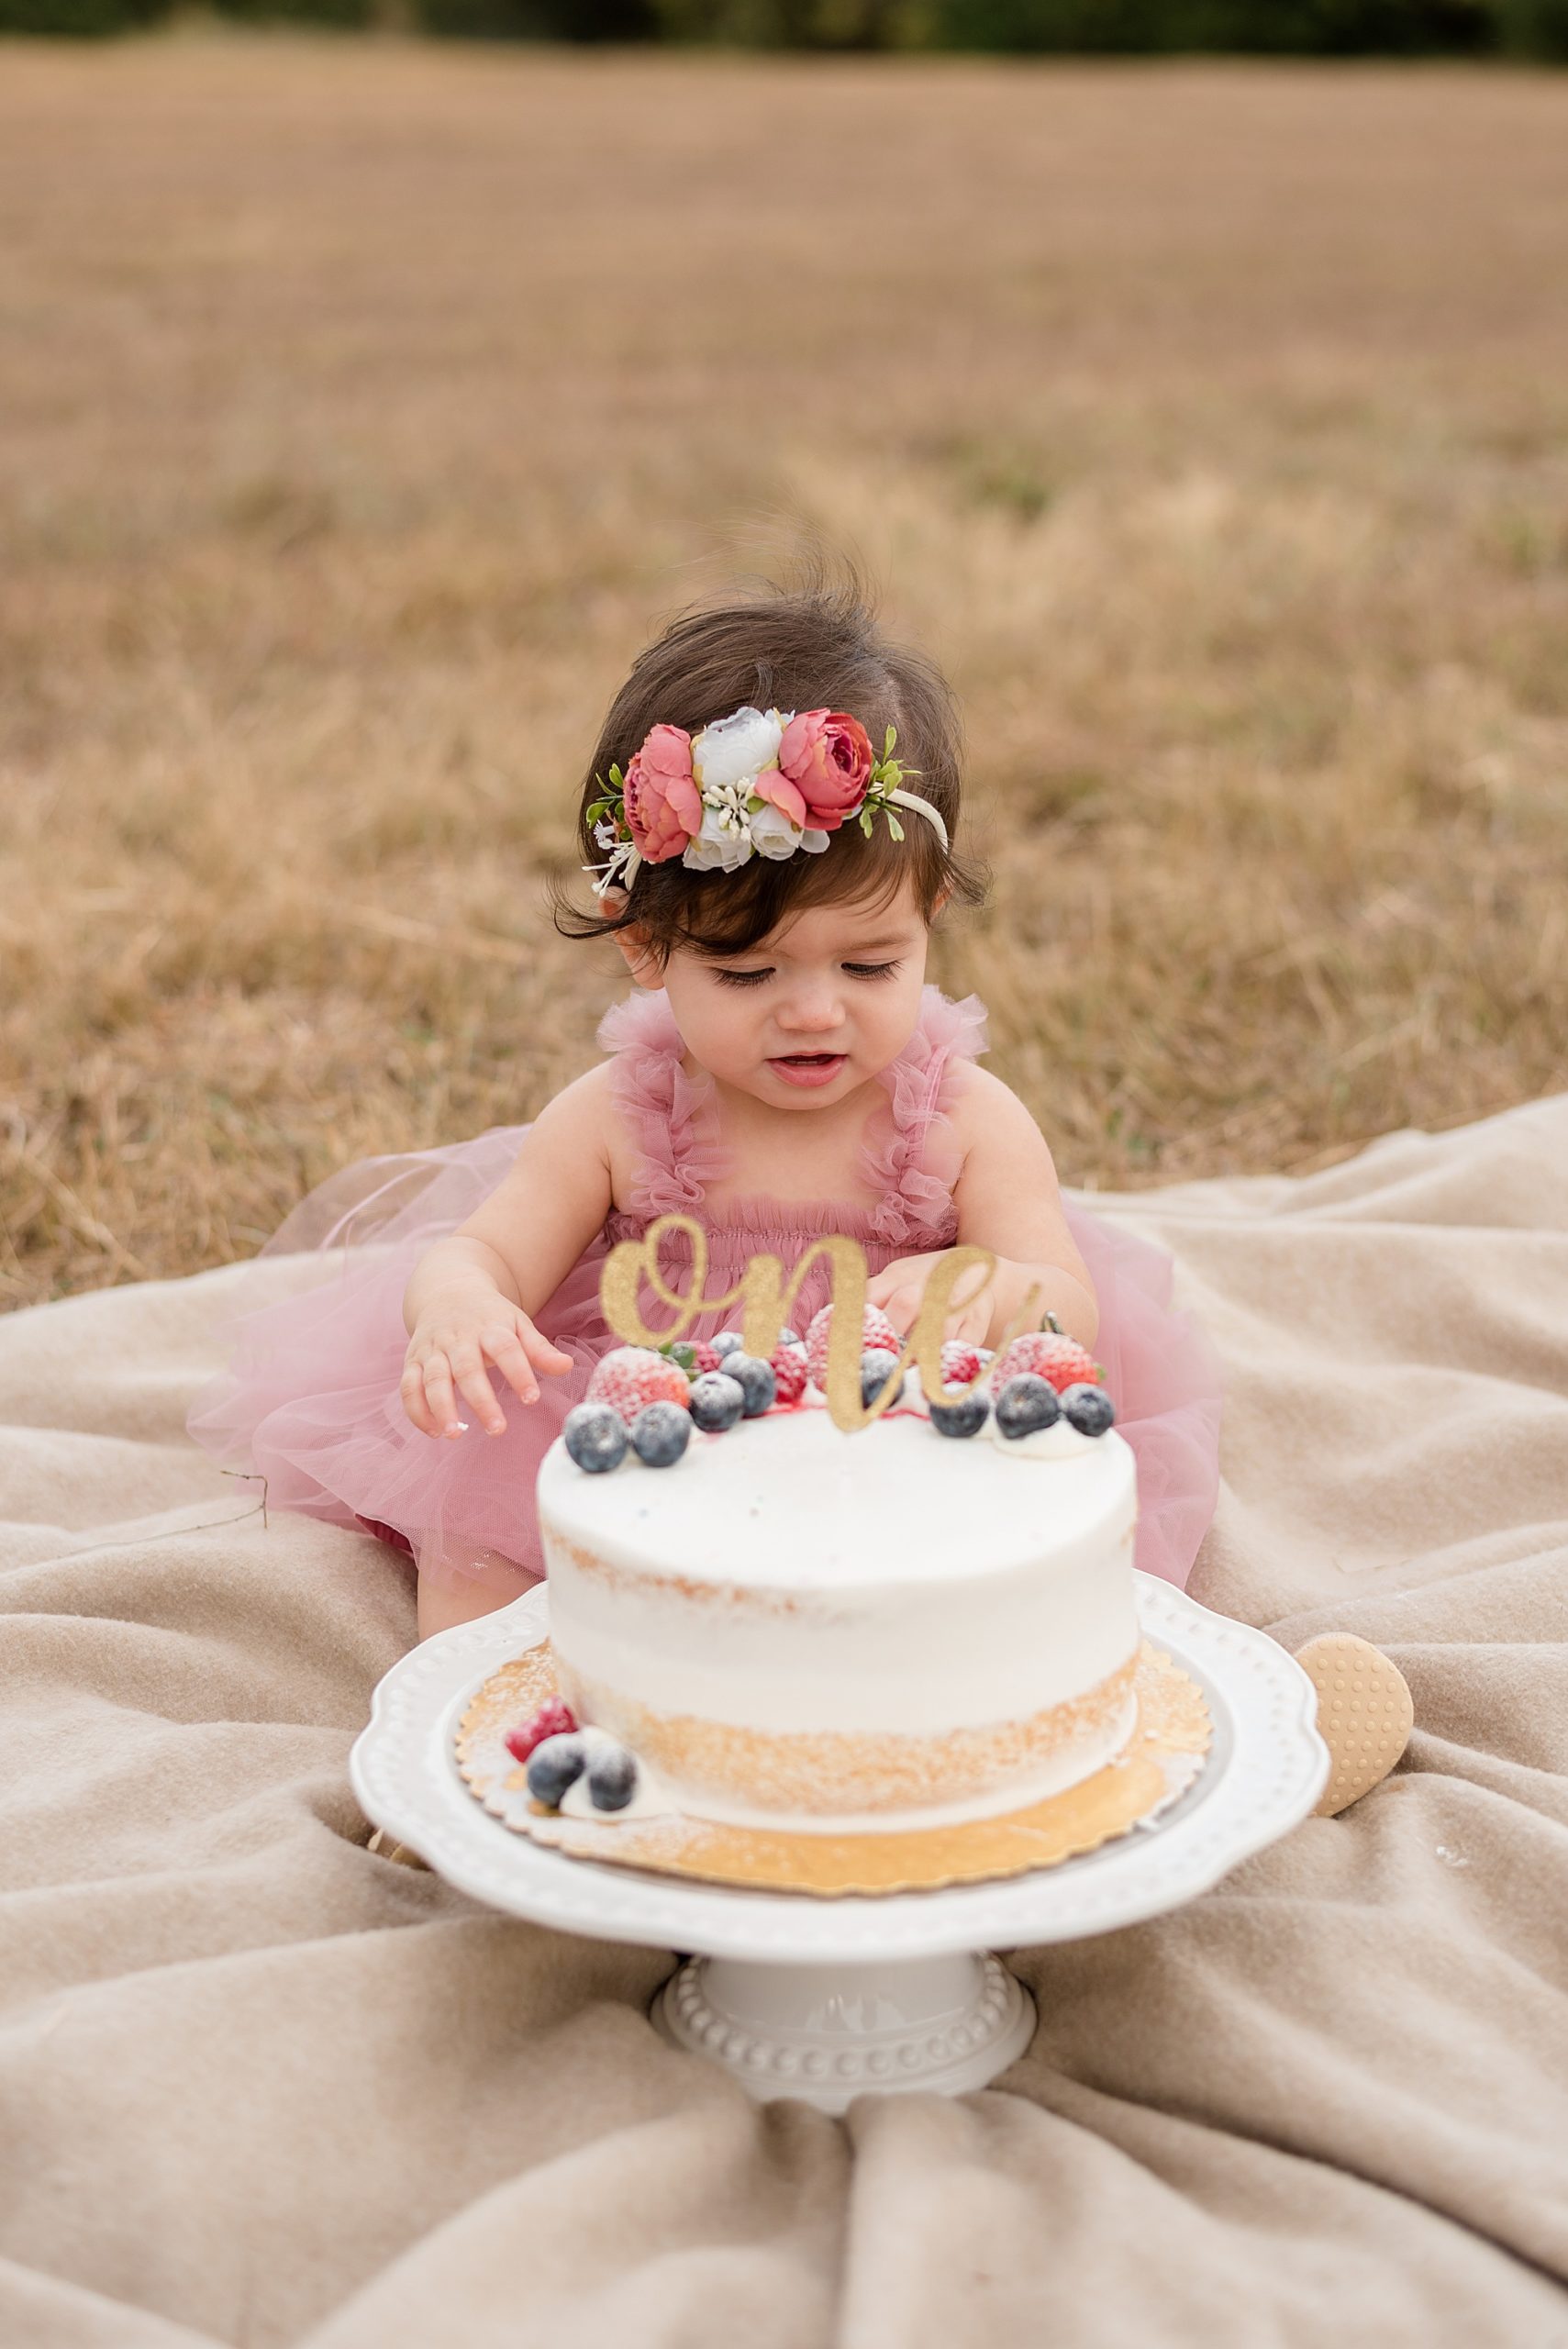 birthday girl enjoys cake during cake smash at Erwin Park in Mckinney, TX